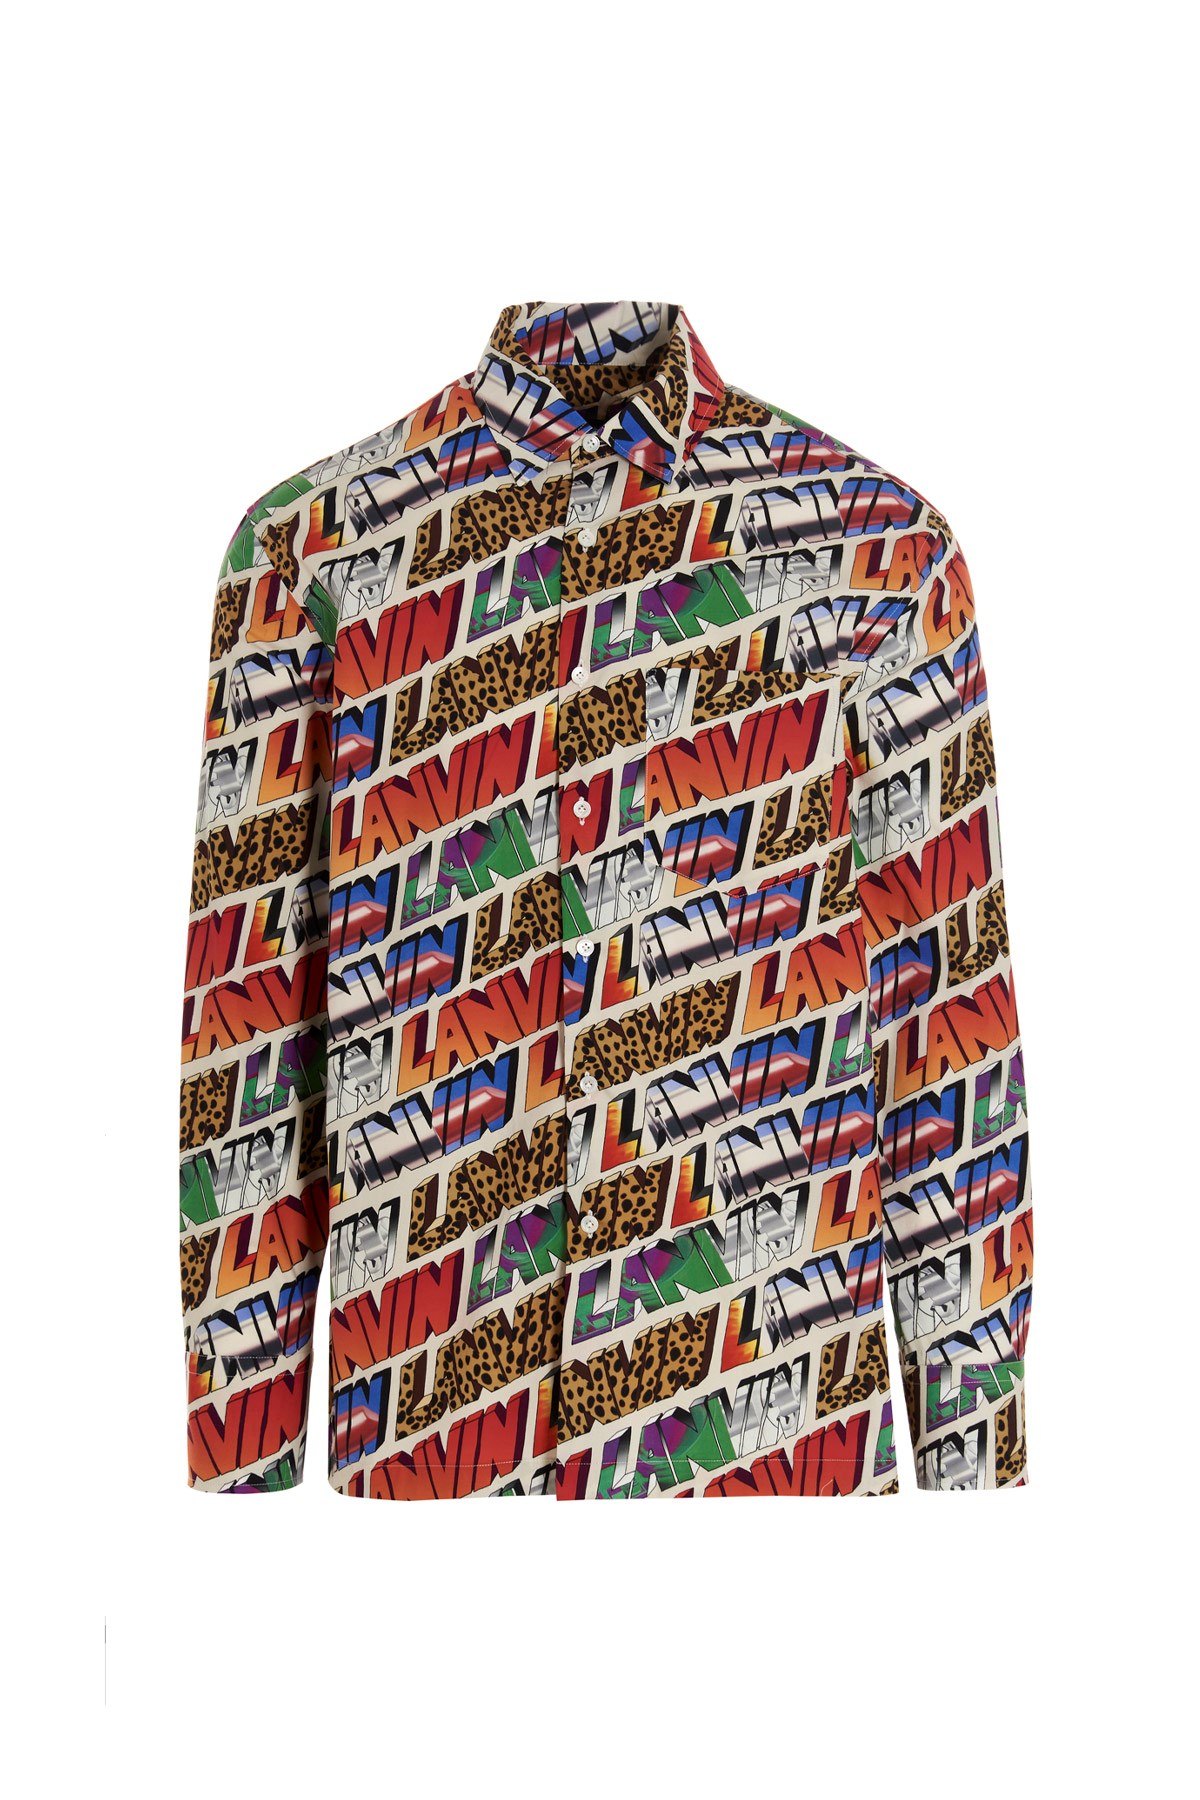 LANVIN 'Rosenquist’ Shirt